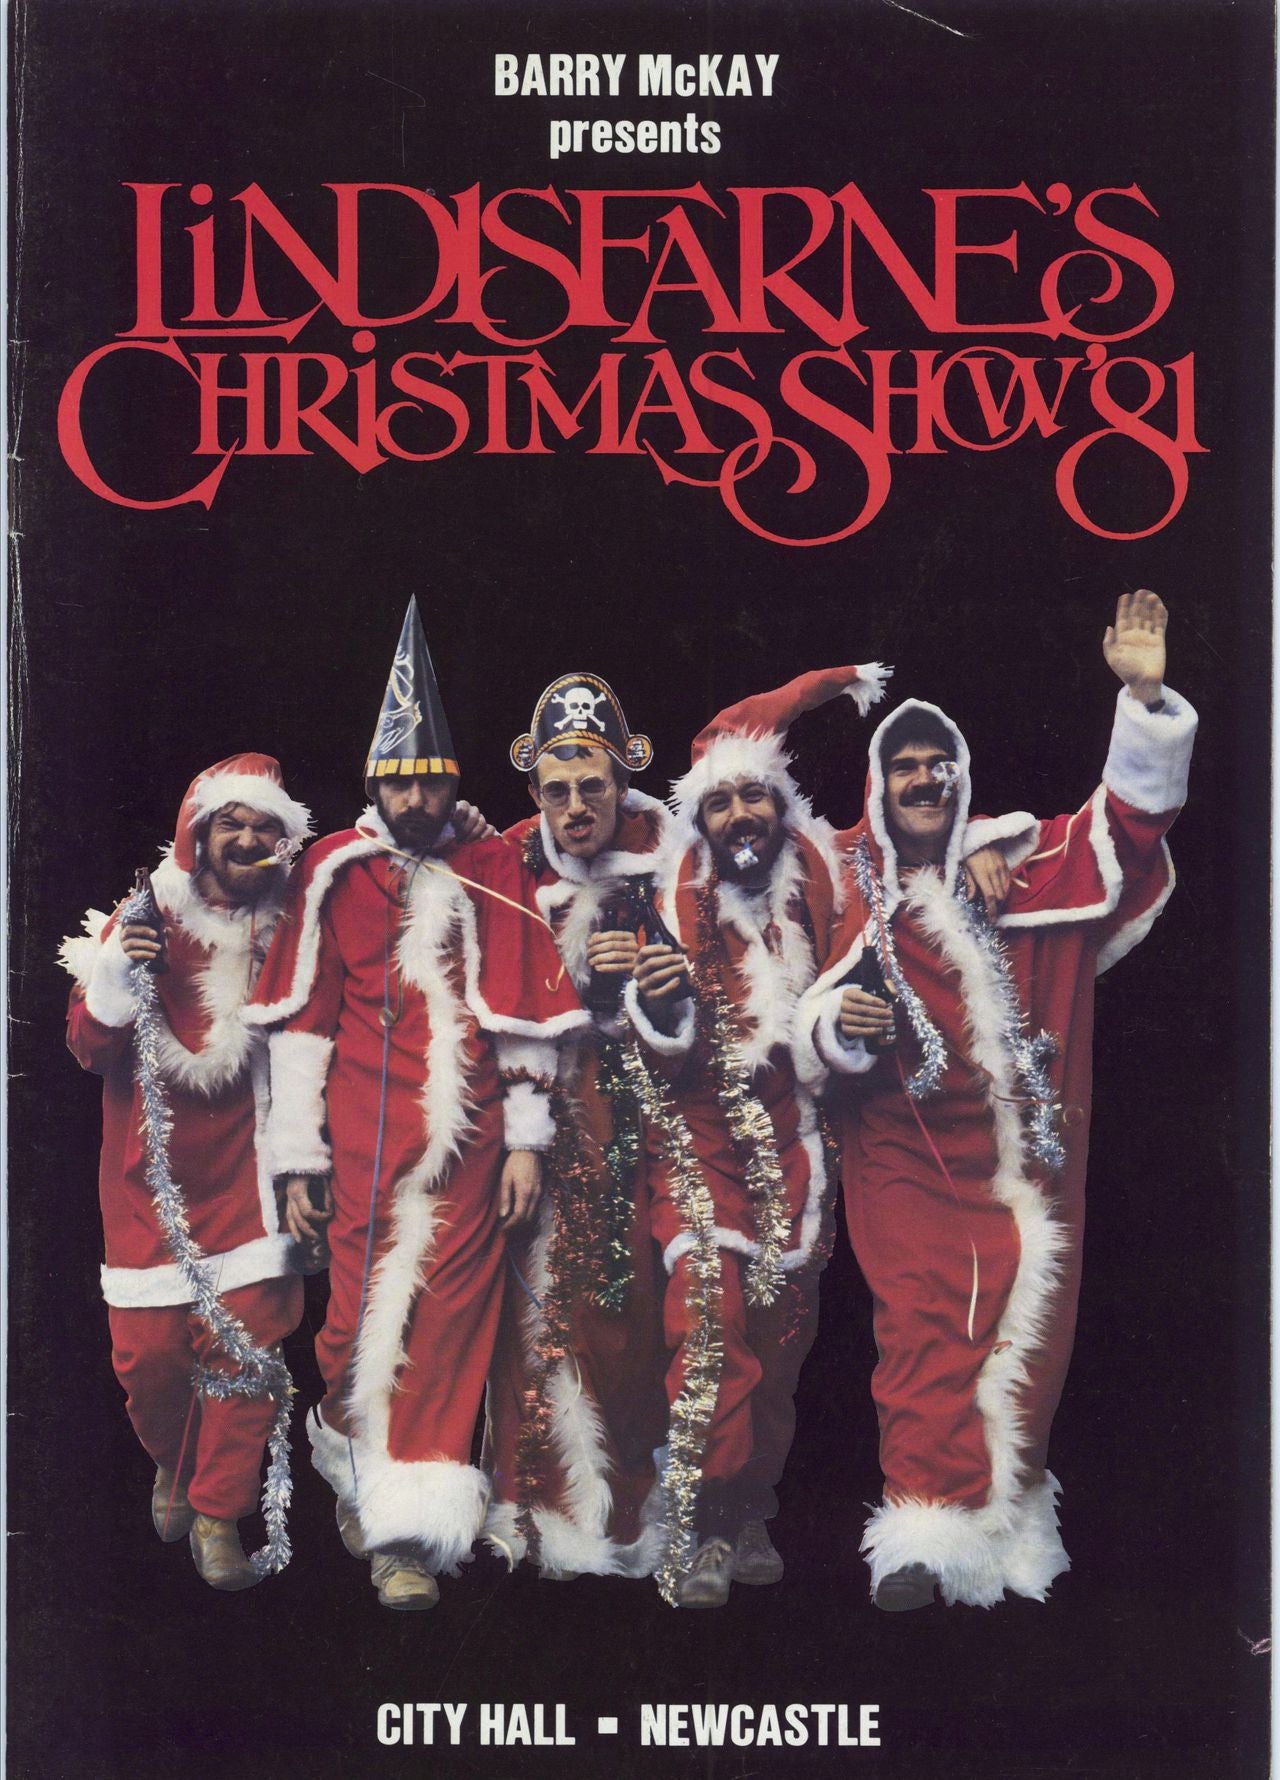 Lindisfarne Lindisfarne's Christmas Show '81 + ticket stub UK tour programme TOUR PROGRAMME